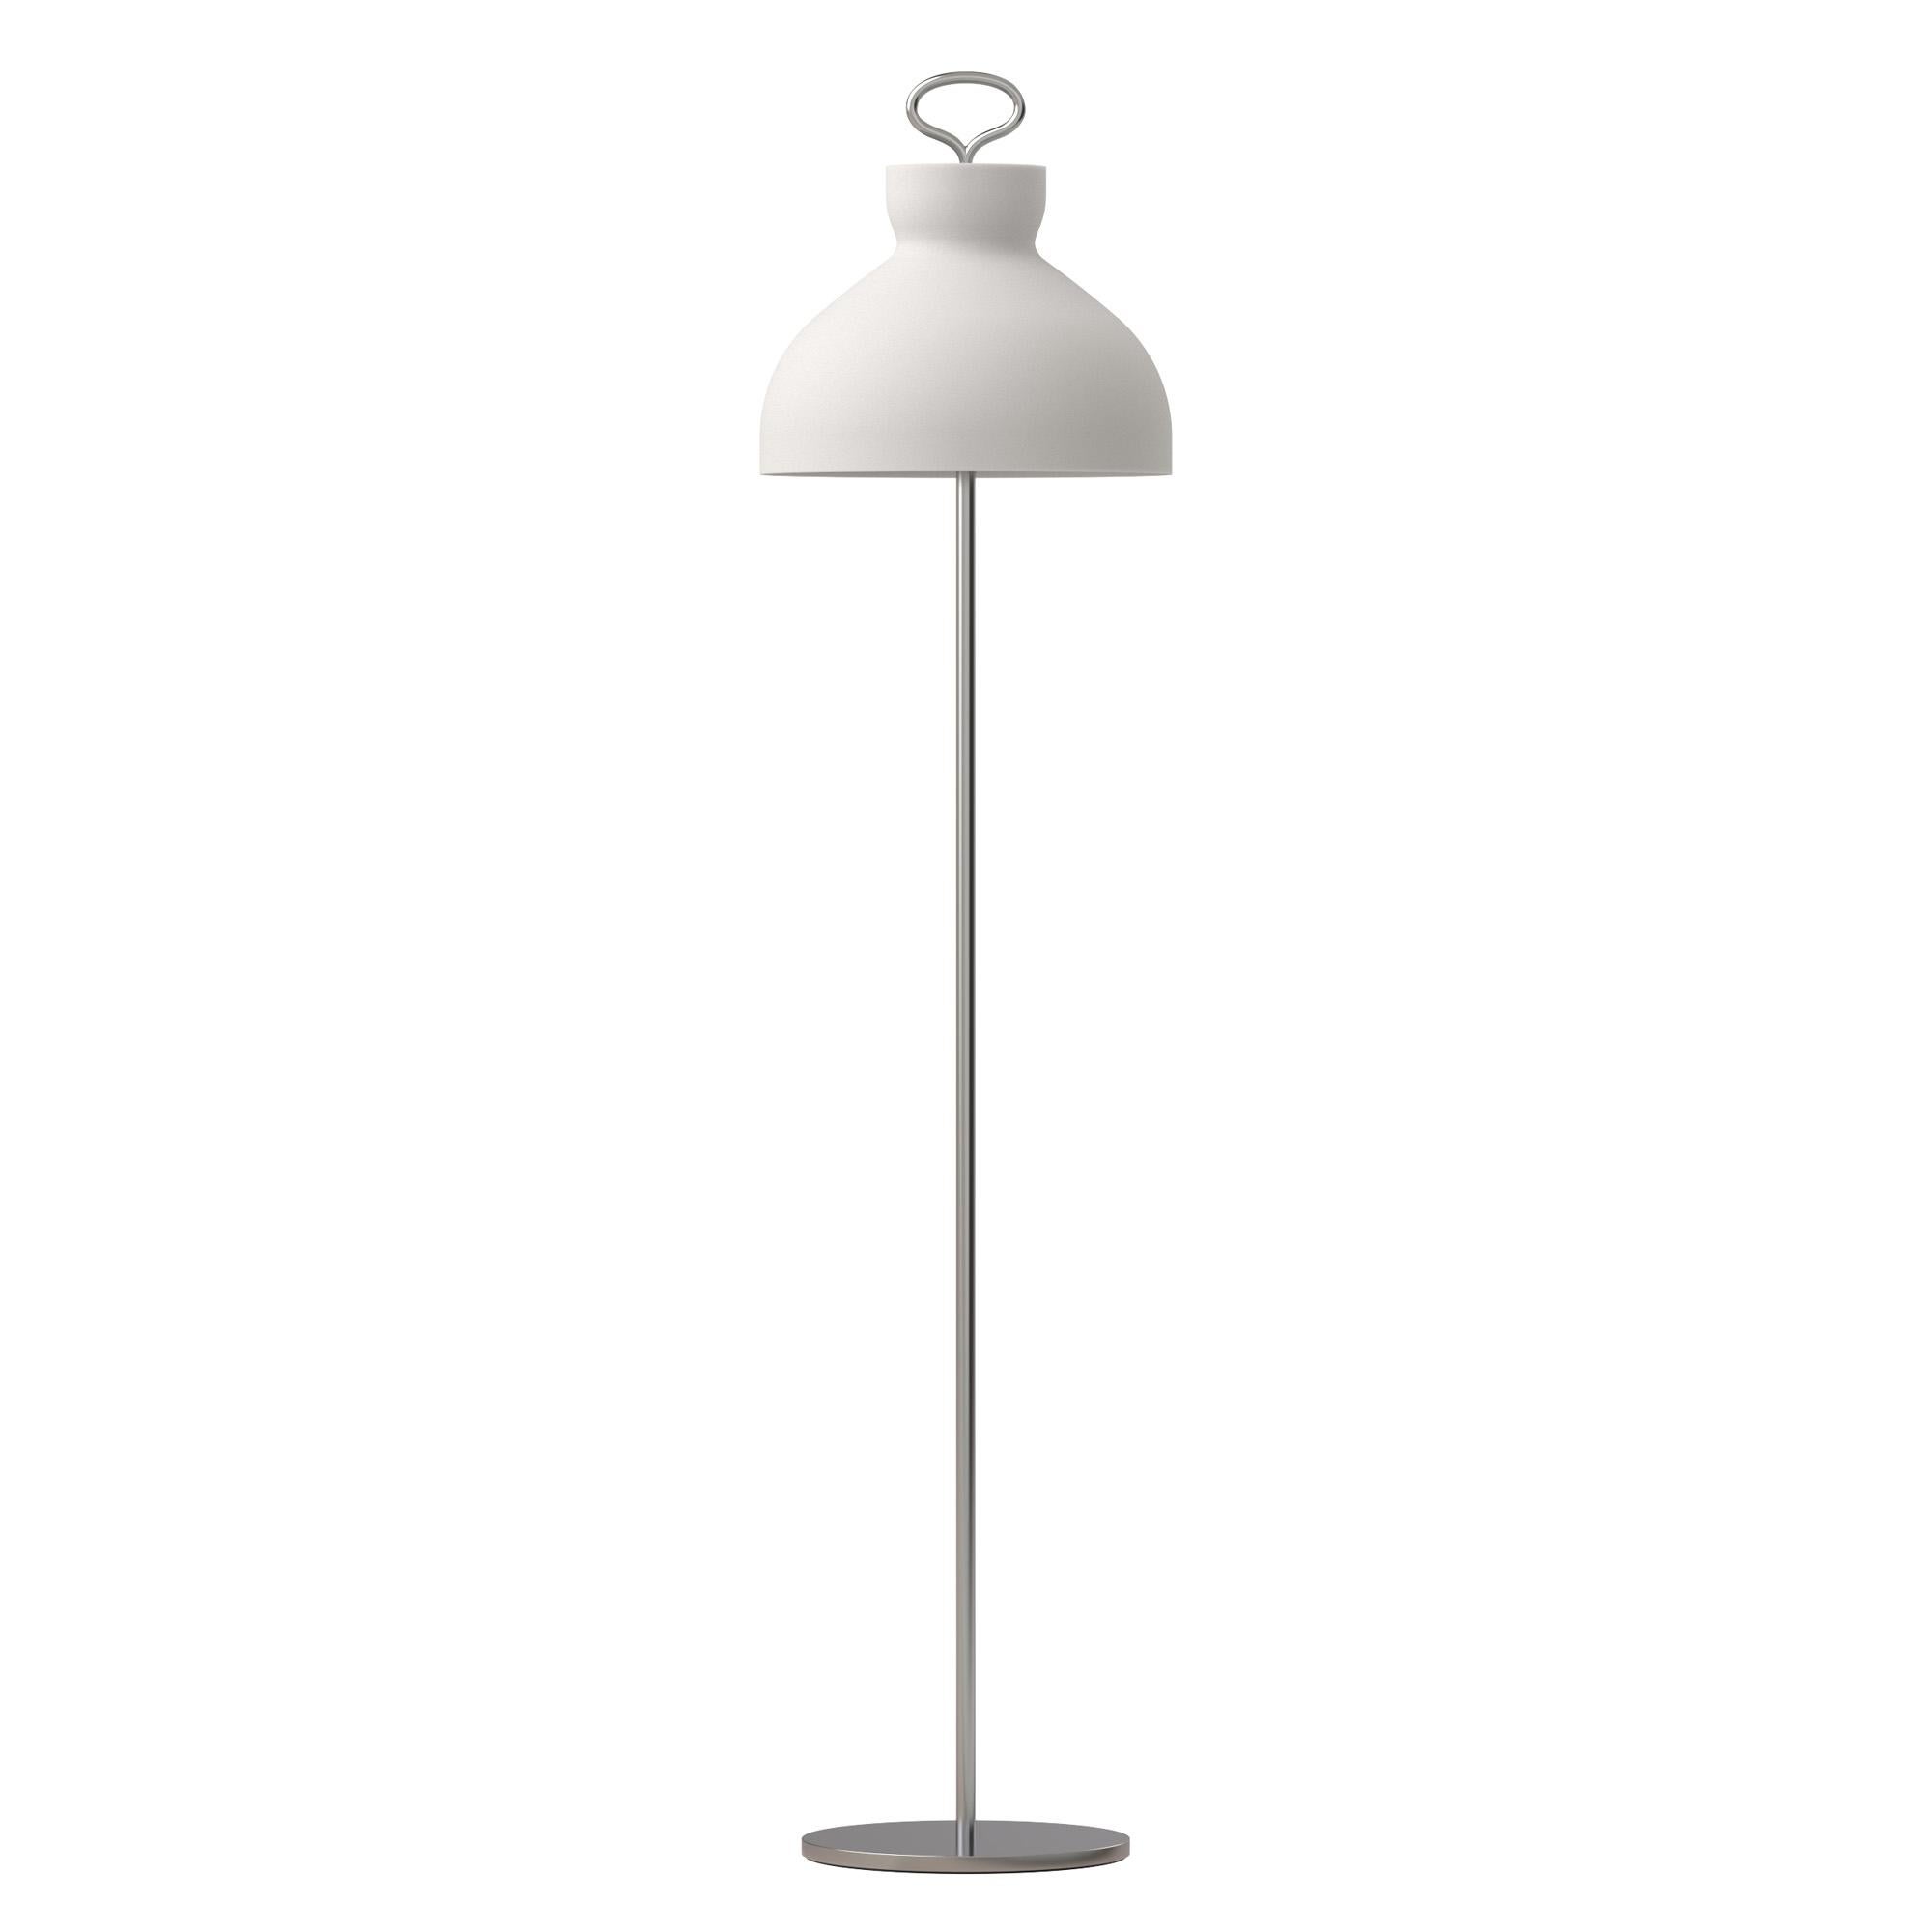 Italian Ignazio Gardella 'Arenzano Terra' Floor Lamp in Chrome and Glass For Sale